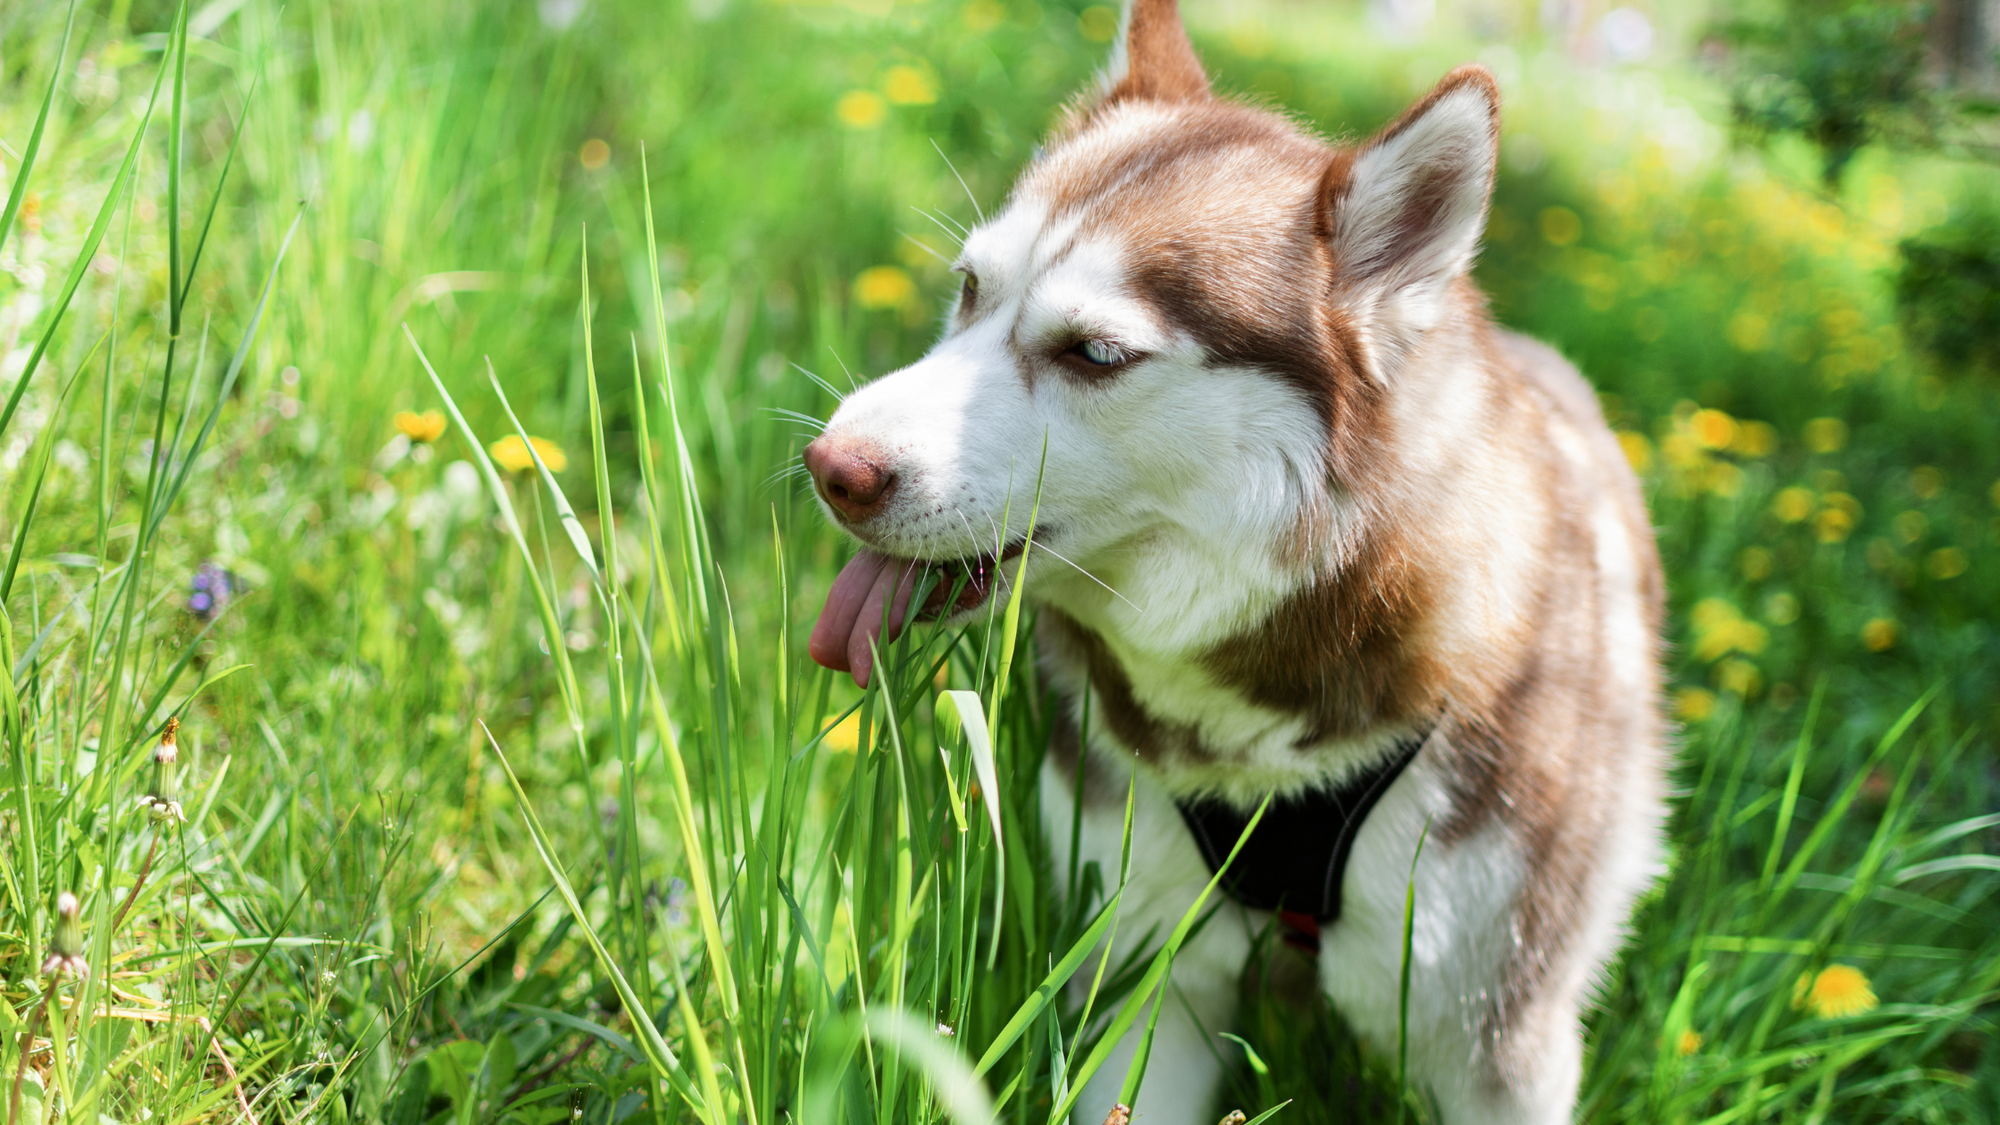 Husky dog licking grass in a field of grass